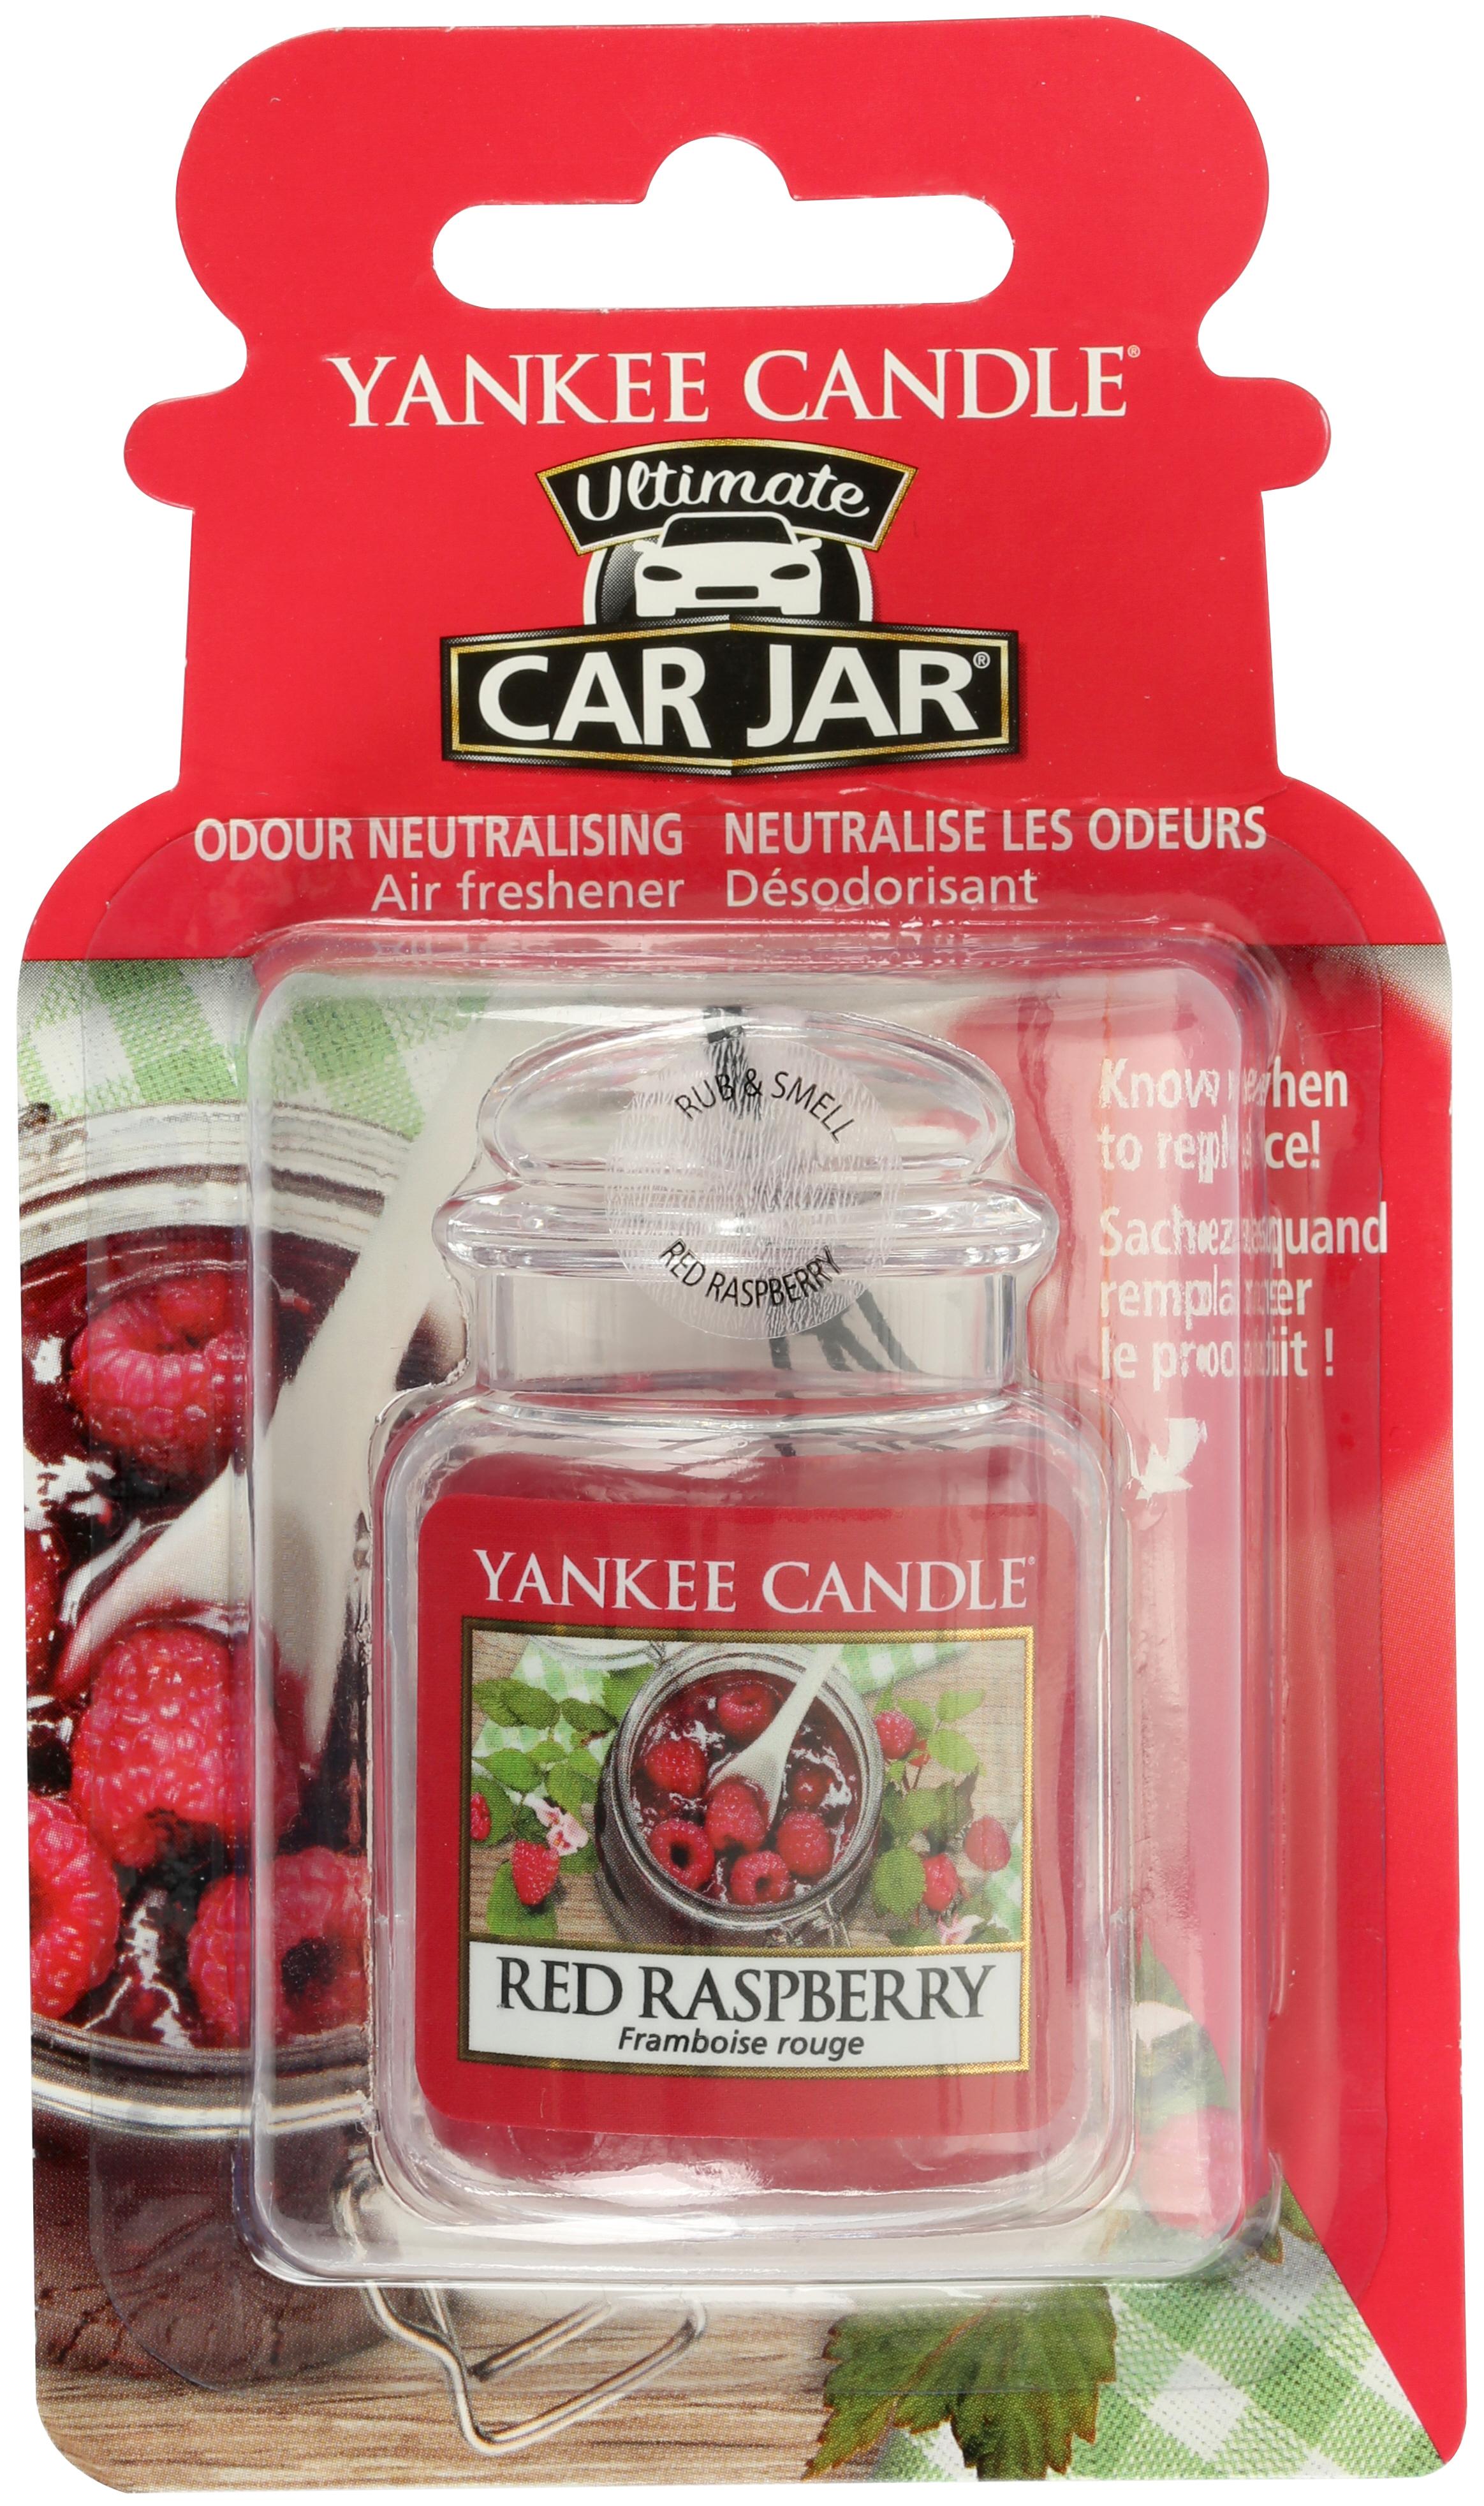 Yankee Candle Car Jar Ultimate Air Freshener In Red Raspberry